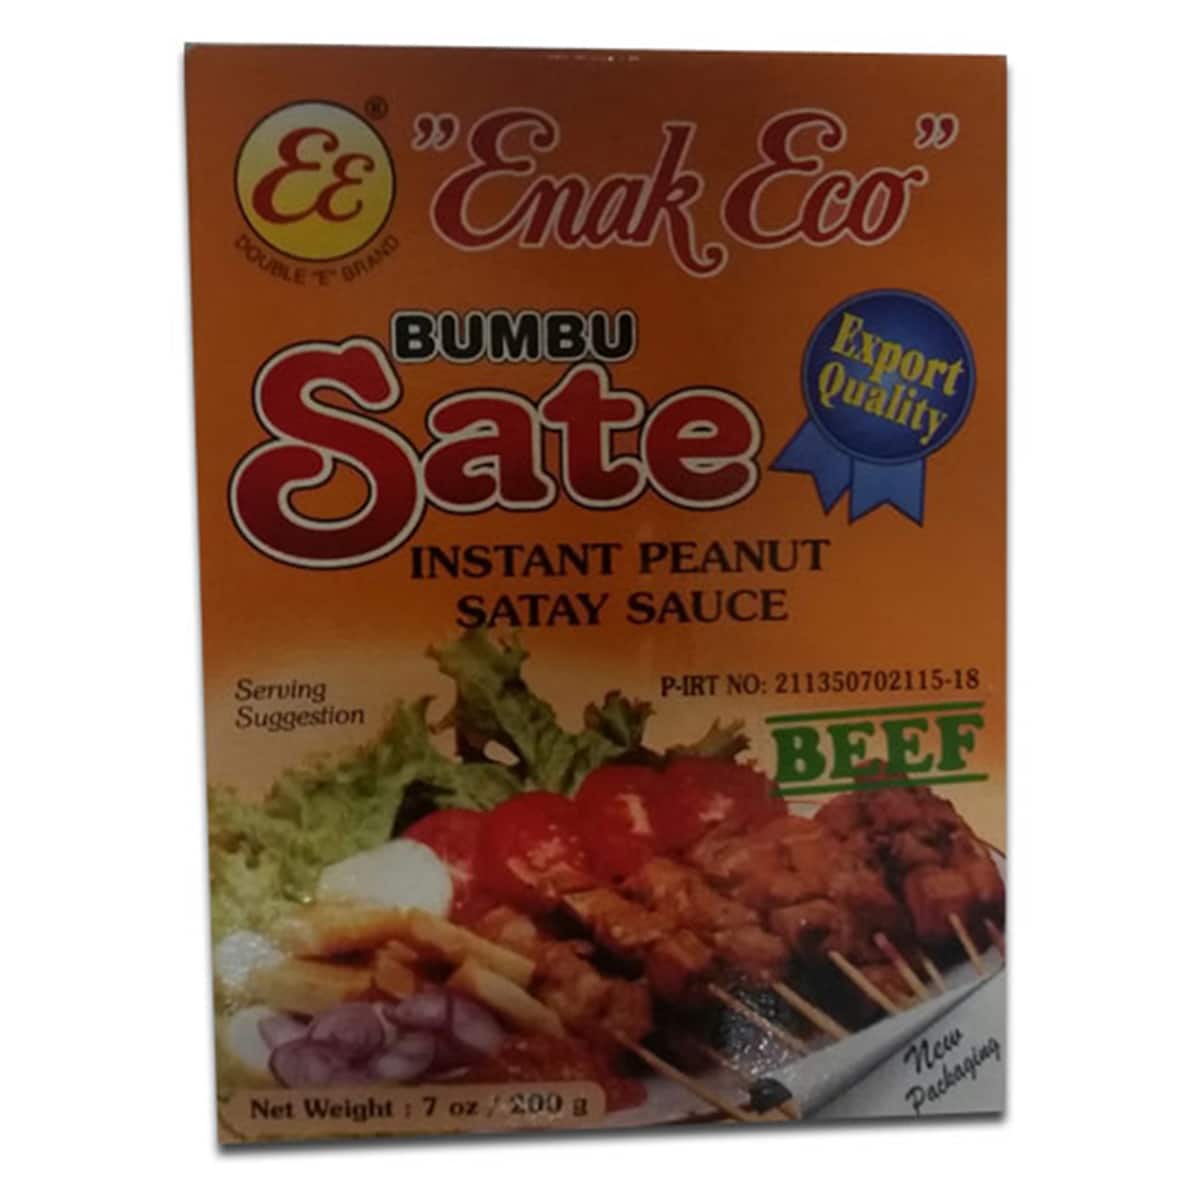 Buy Enak Eco Bumbu Sate (Instant Peanut Satay Sauce) Beef - 200 gm